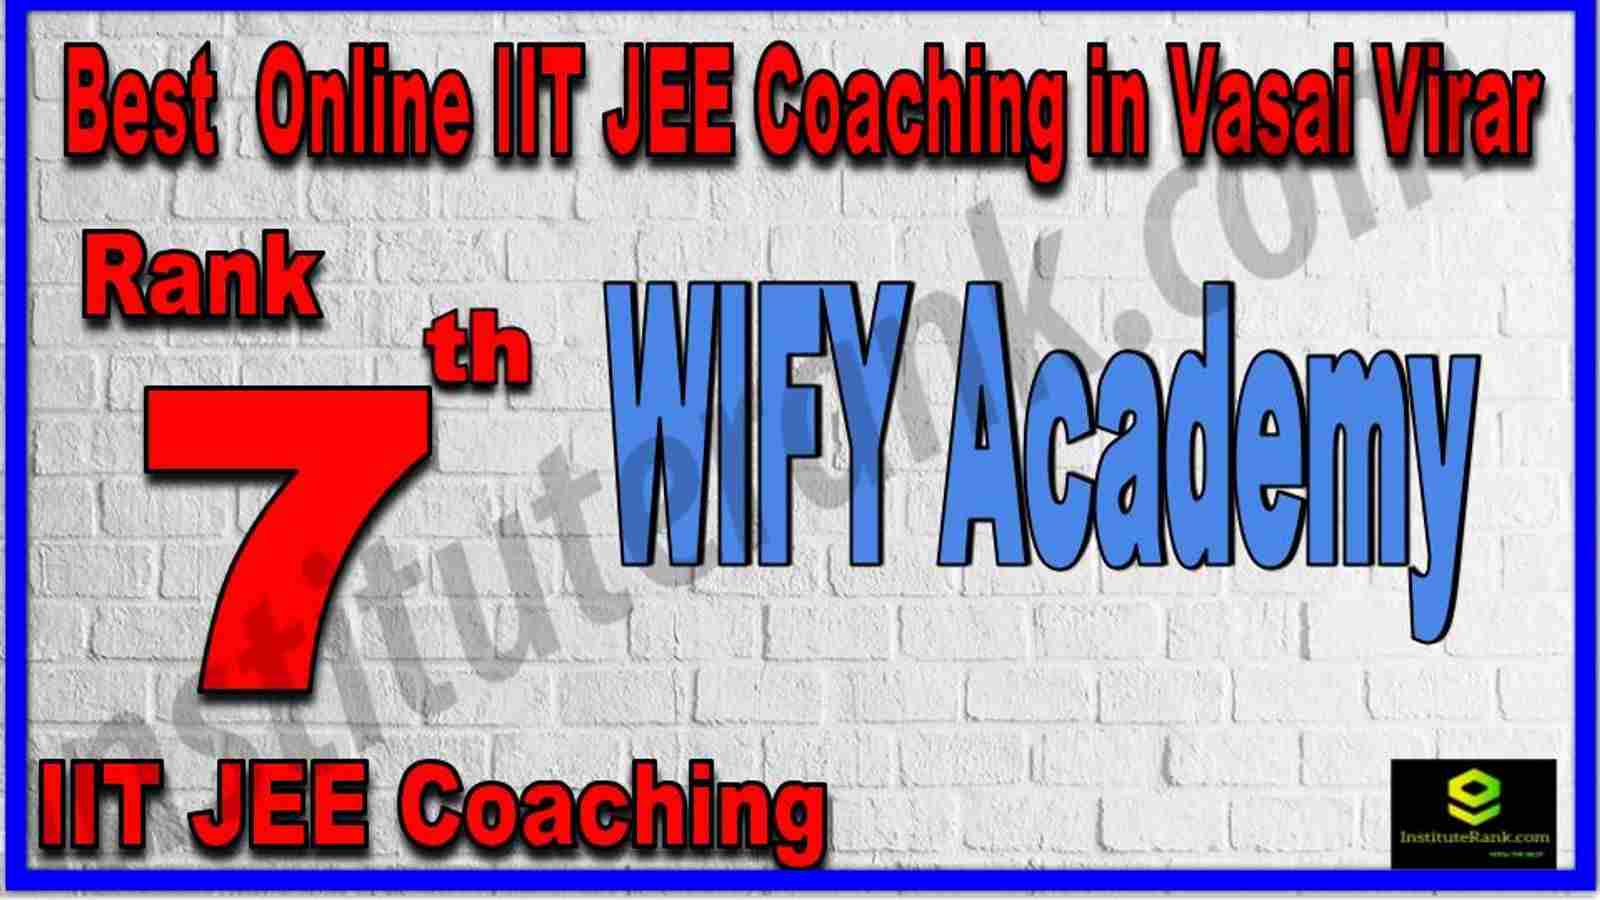 Rank 7th Best Online IIT JEE Coaching in Vasai Virar